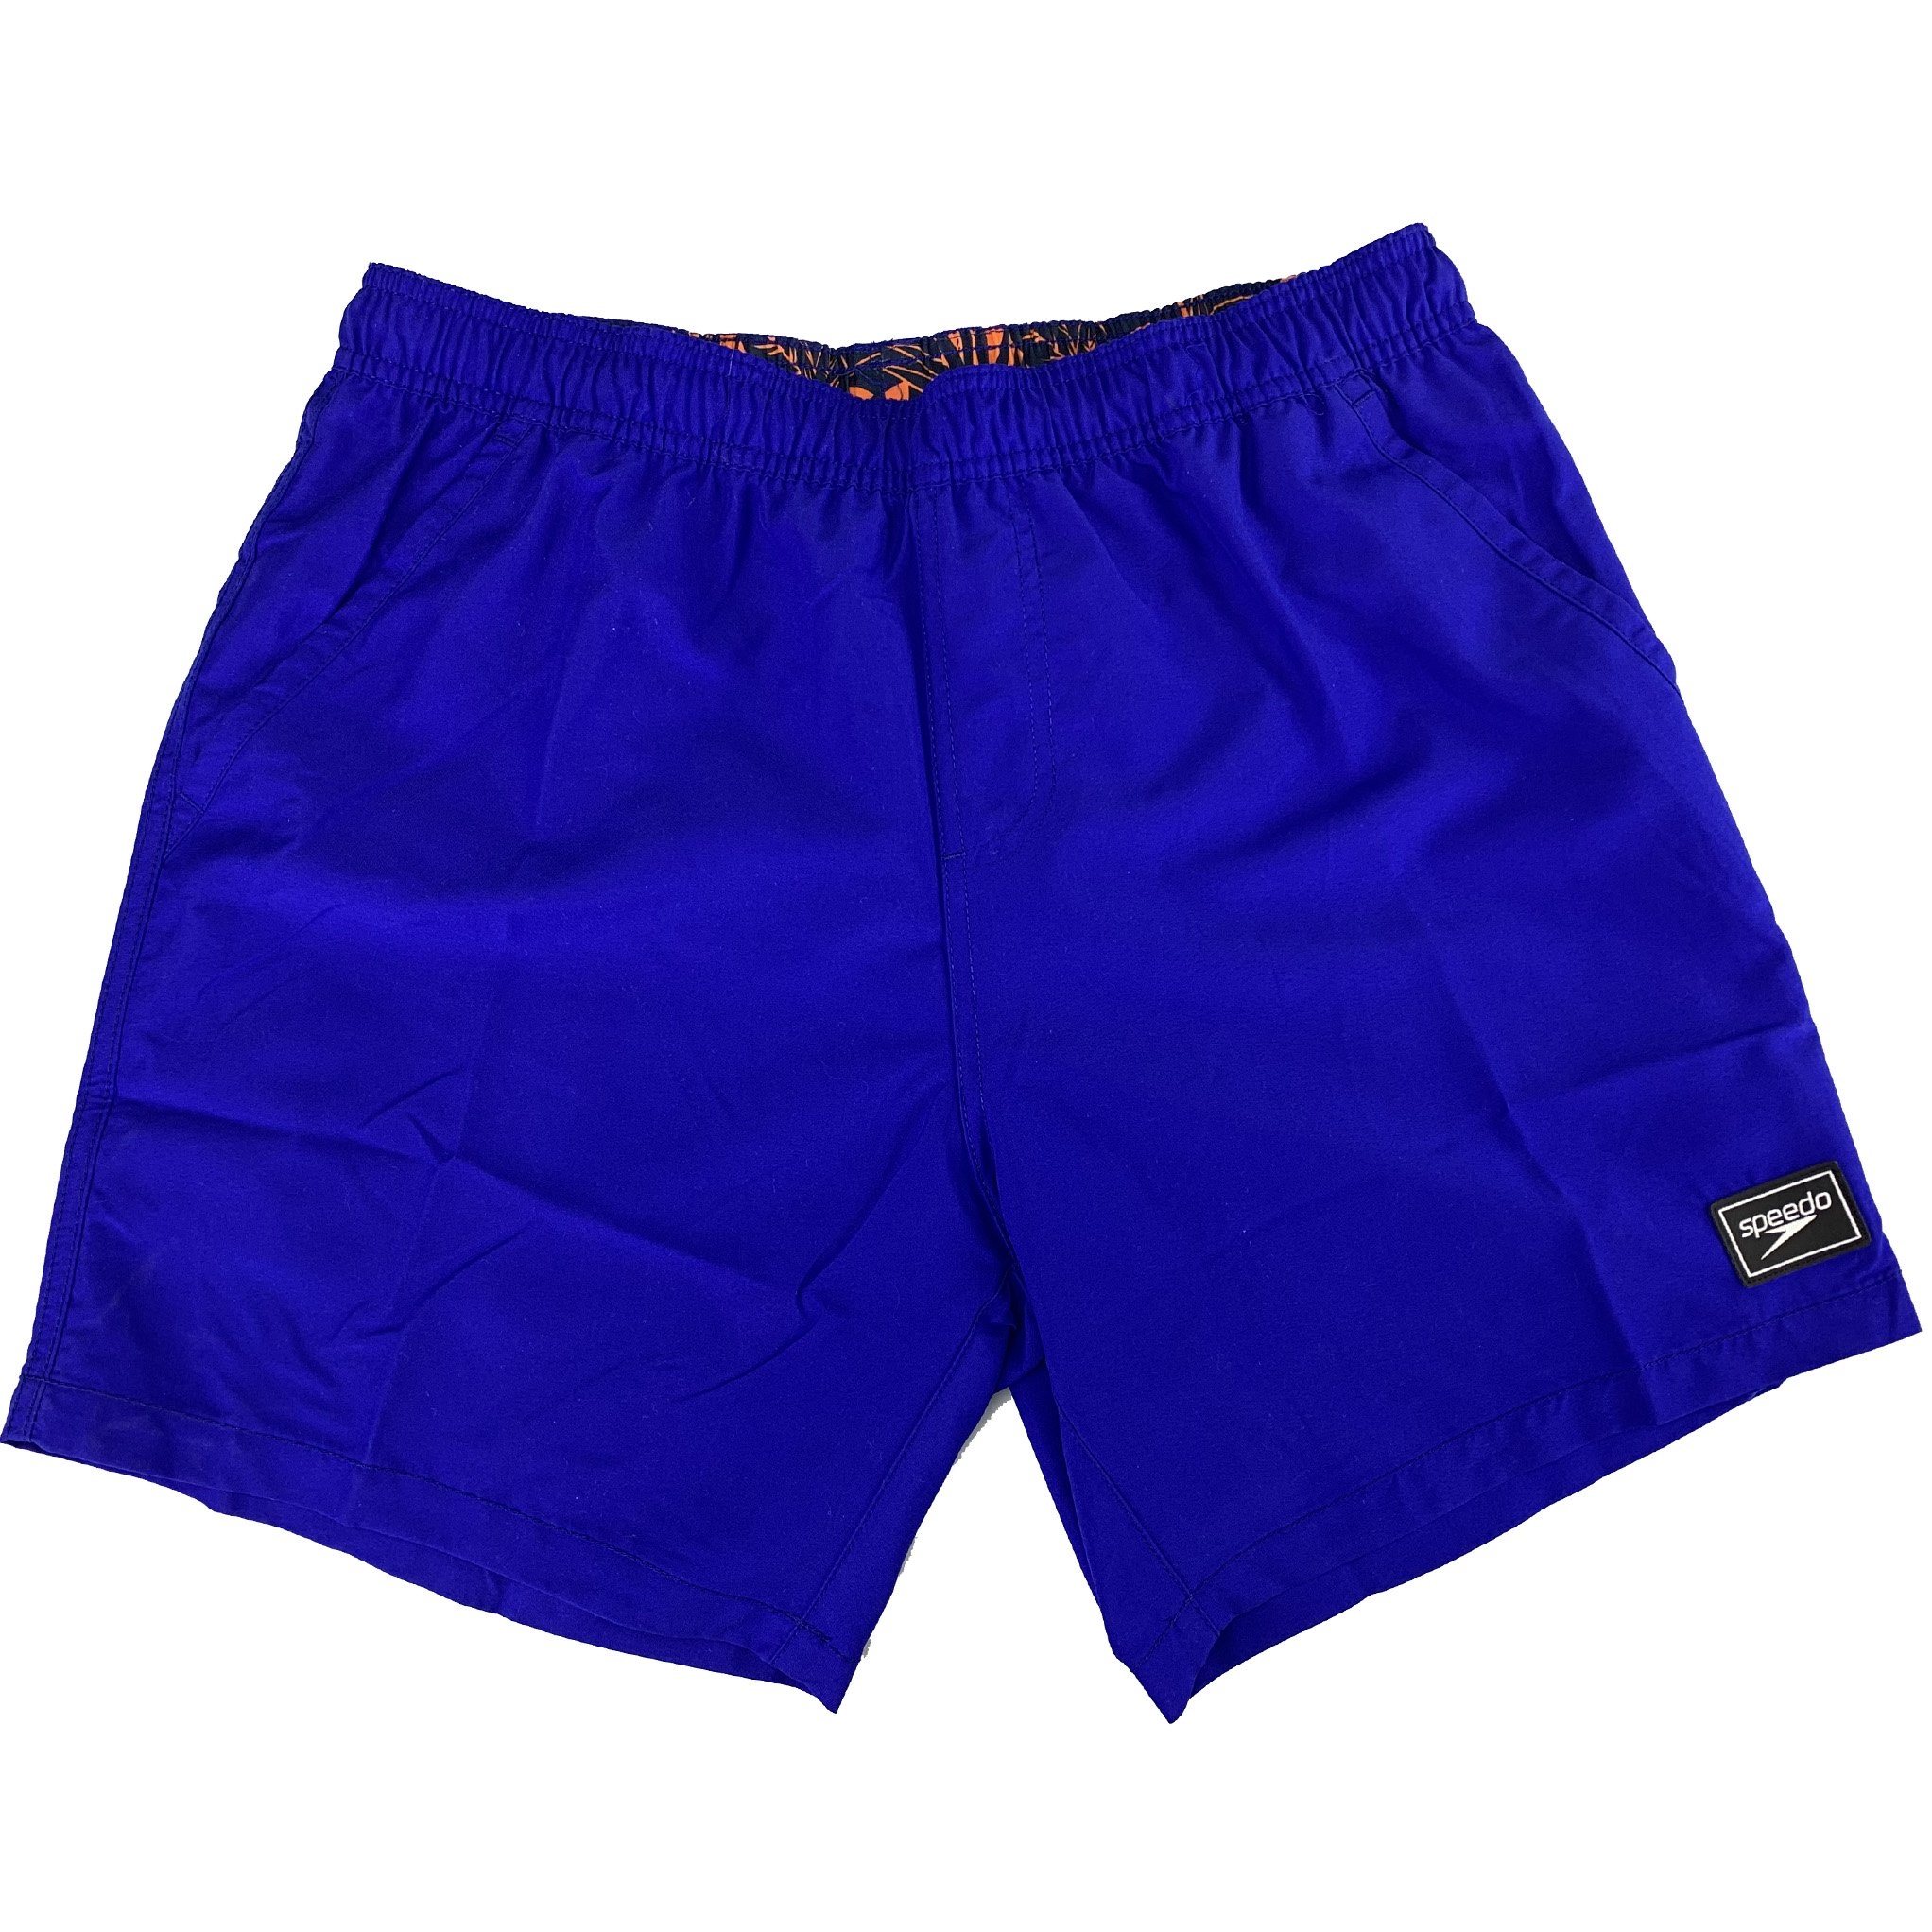 Speedo Leisure Swim Shorts Recycled Polyester fabric | Medium